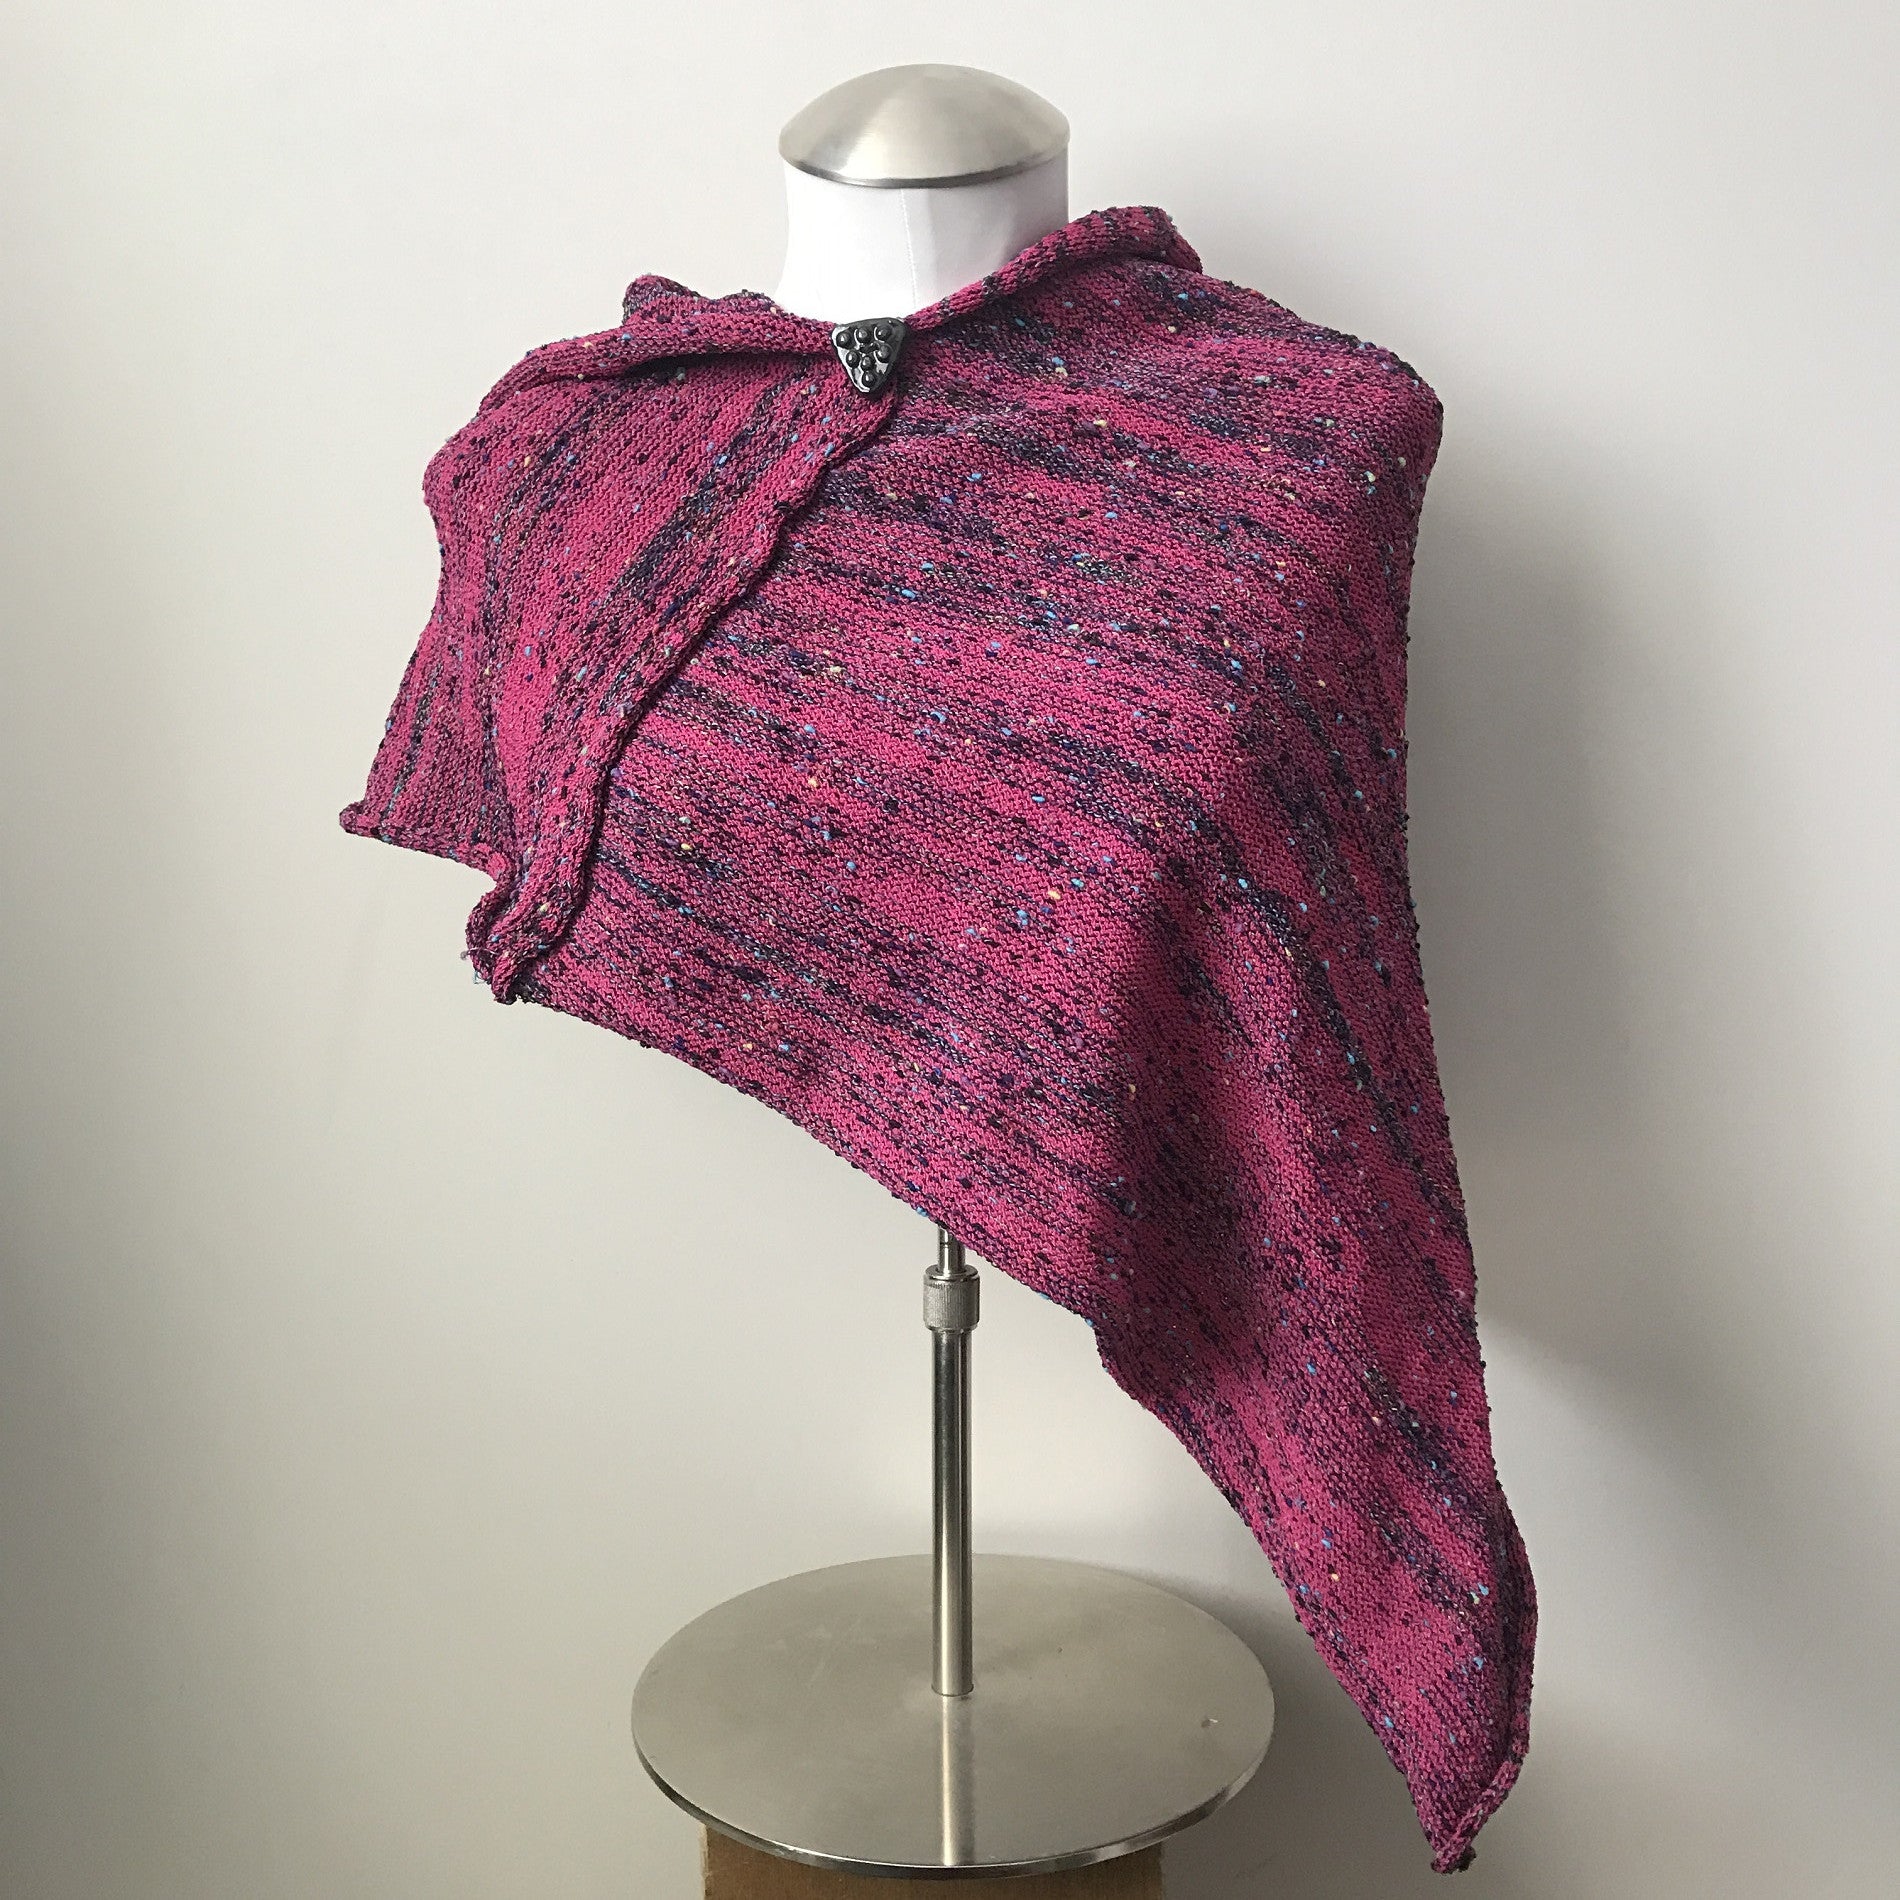 Fine Knit Hot Pink Tweed Shawl w/Ceramic Button, (SH701)